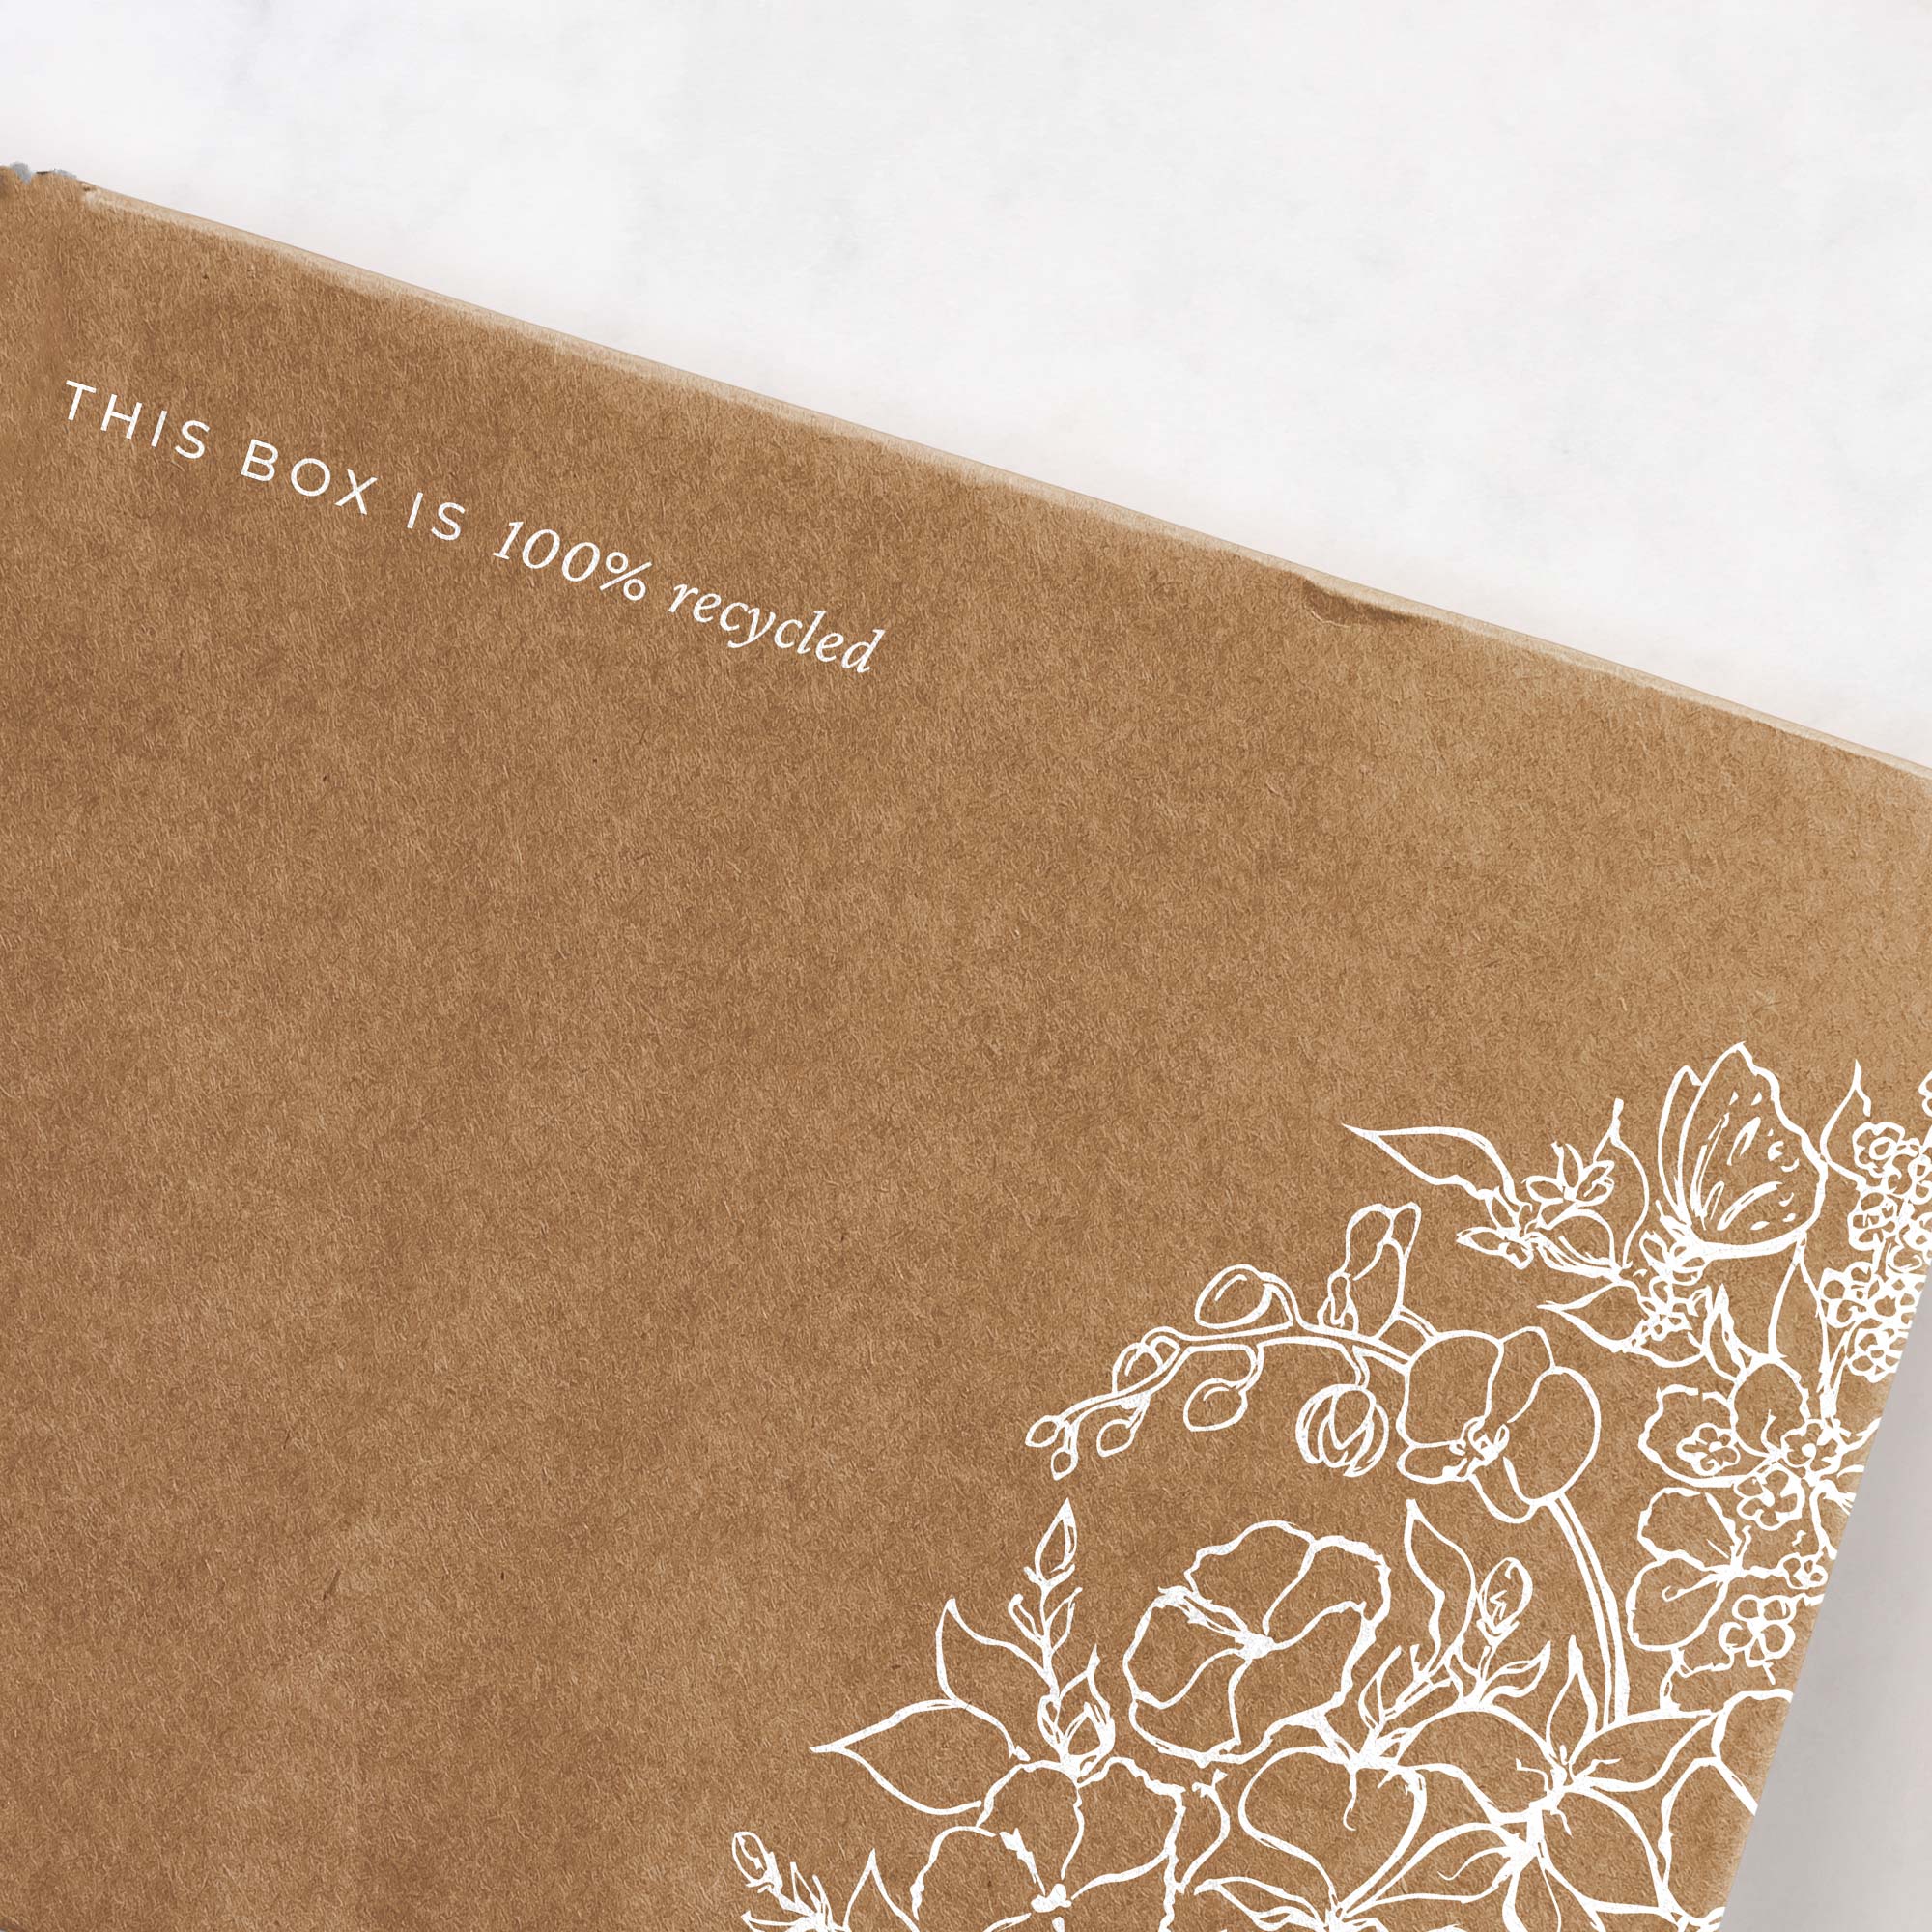 karolina krol studio phalena haircare minimalist sustainable shipping box packaging design back close up